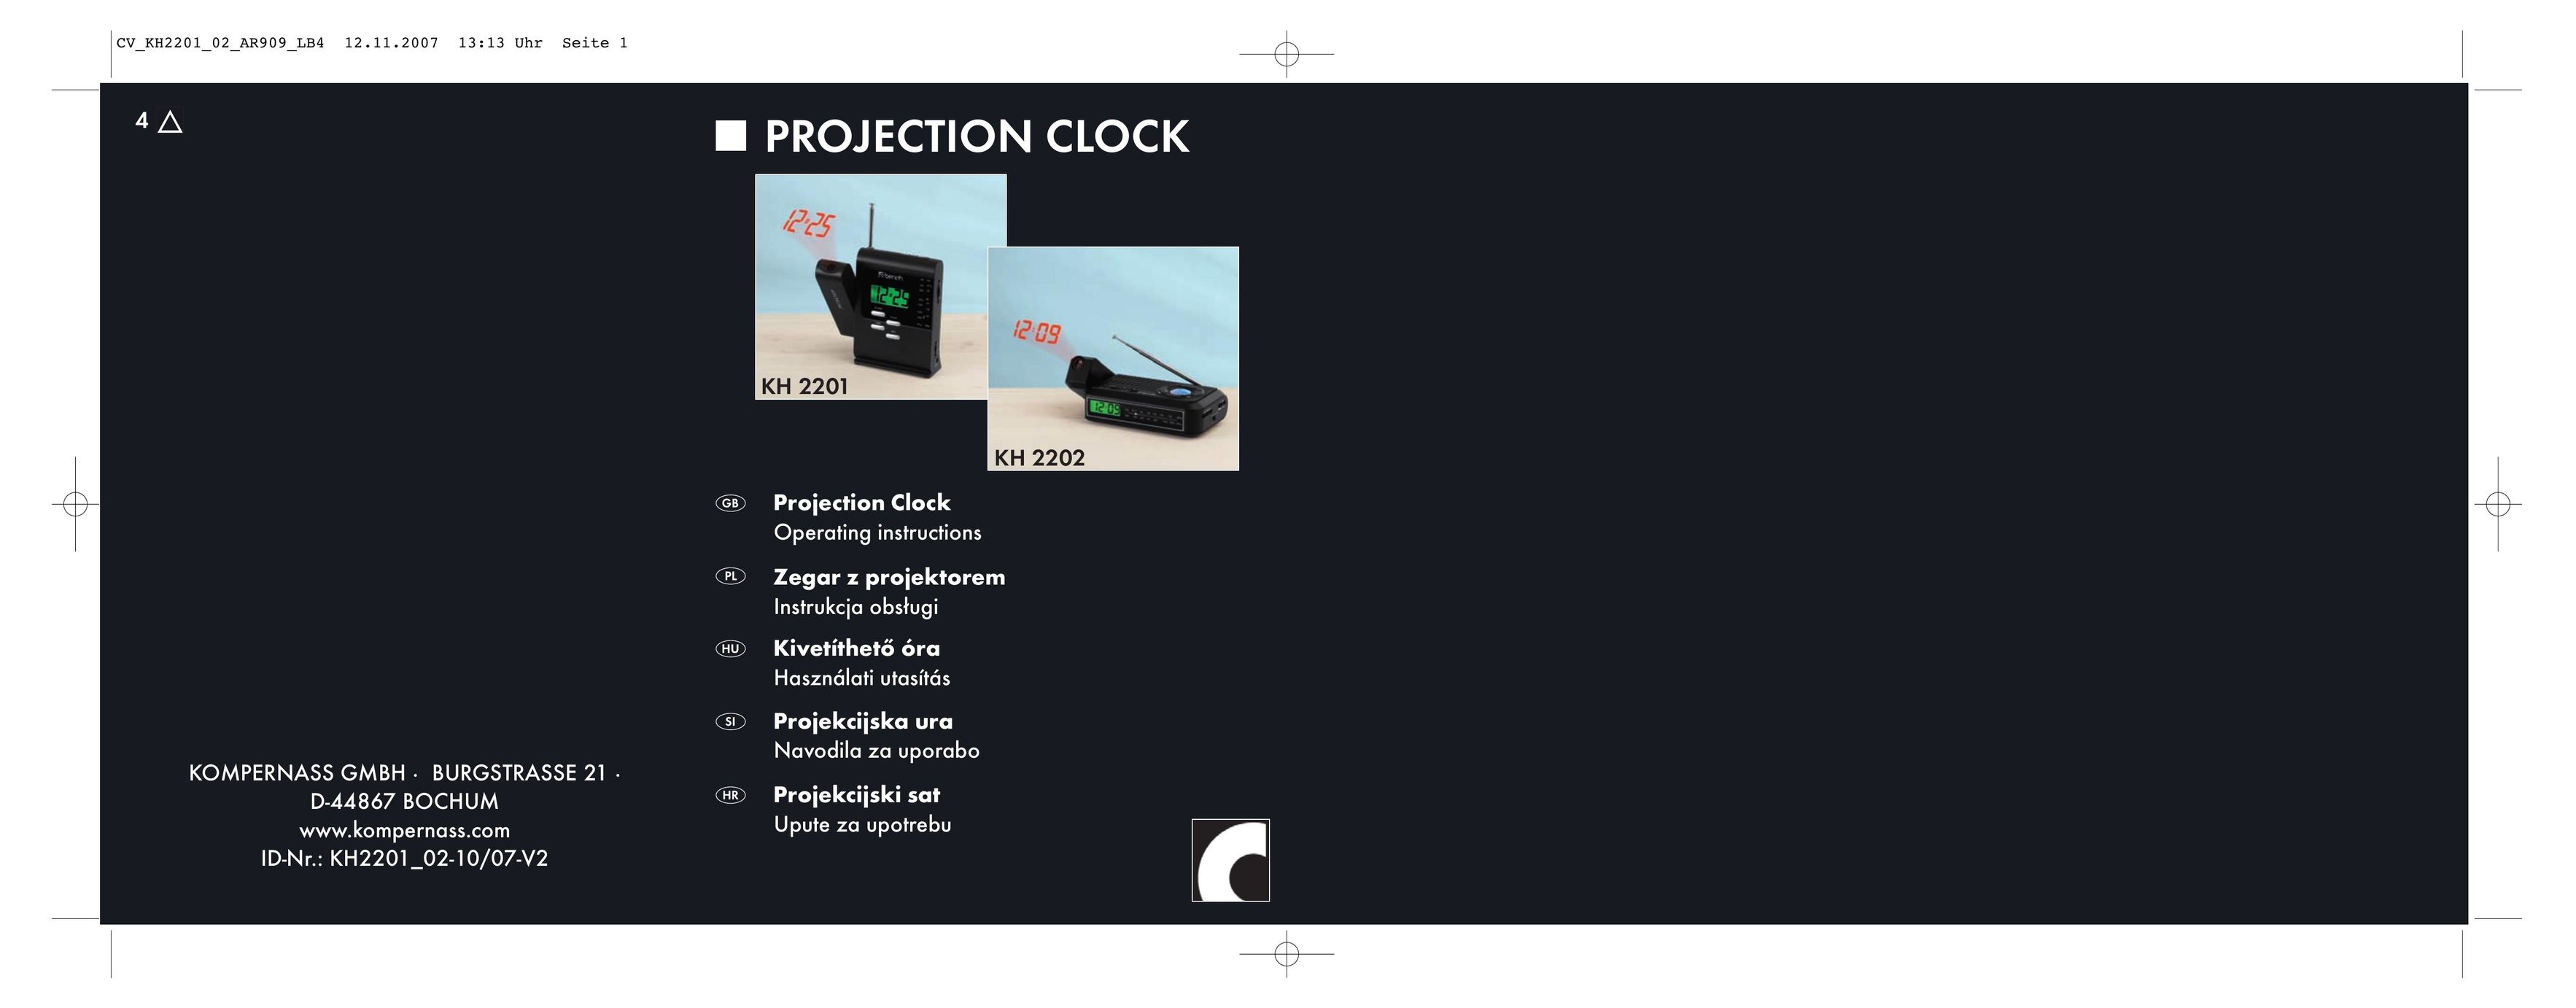 Kompernass KH 2202 Clock User Manual